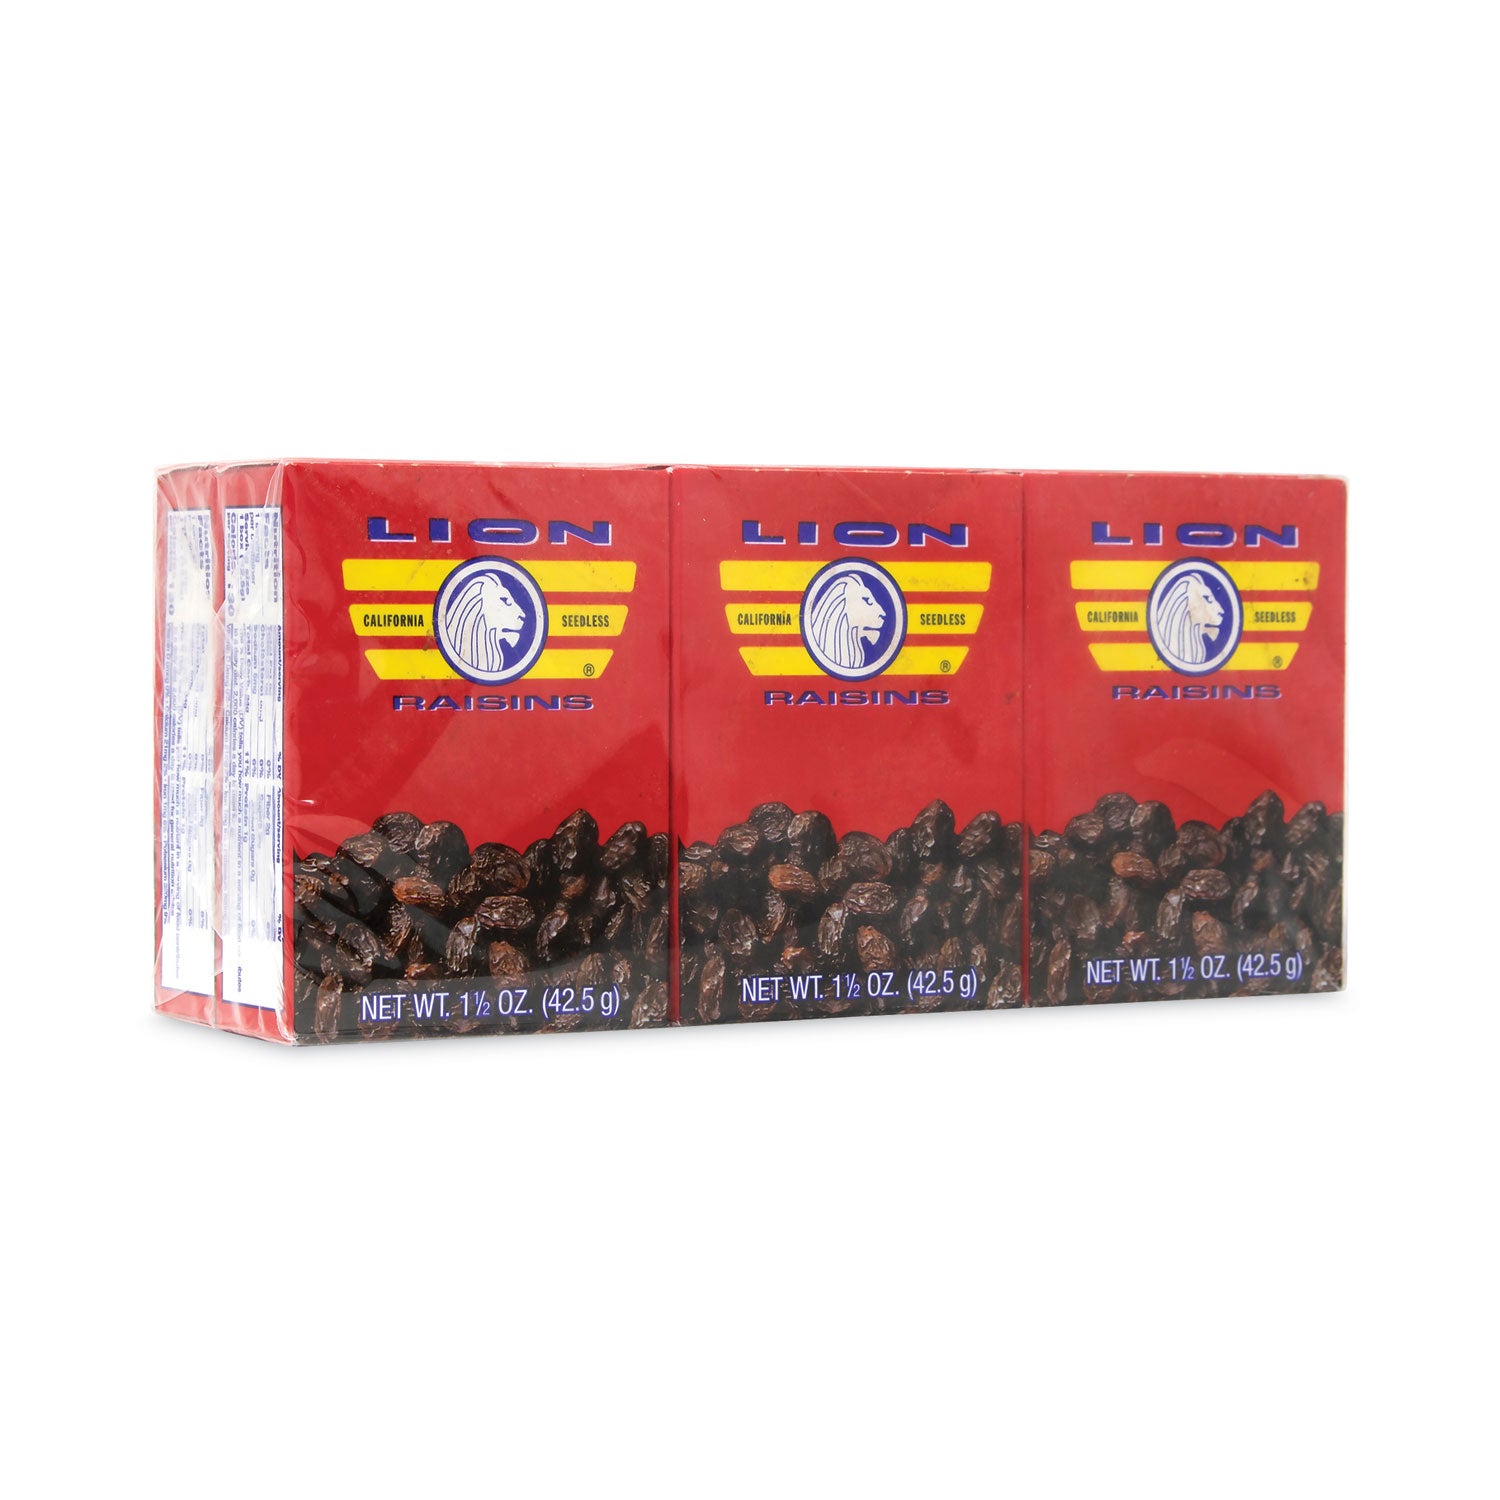 california-seedless-raisins-15-oz-box-6-pack-ships-in-1-3-business-days_grr30801001 - 2